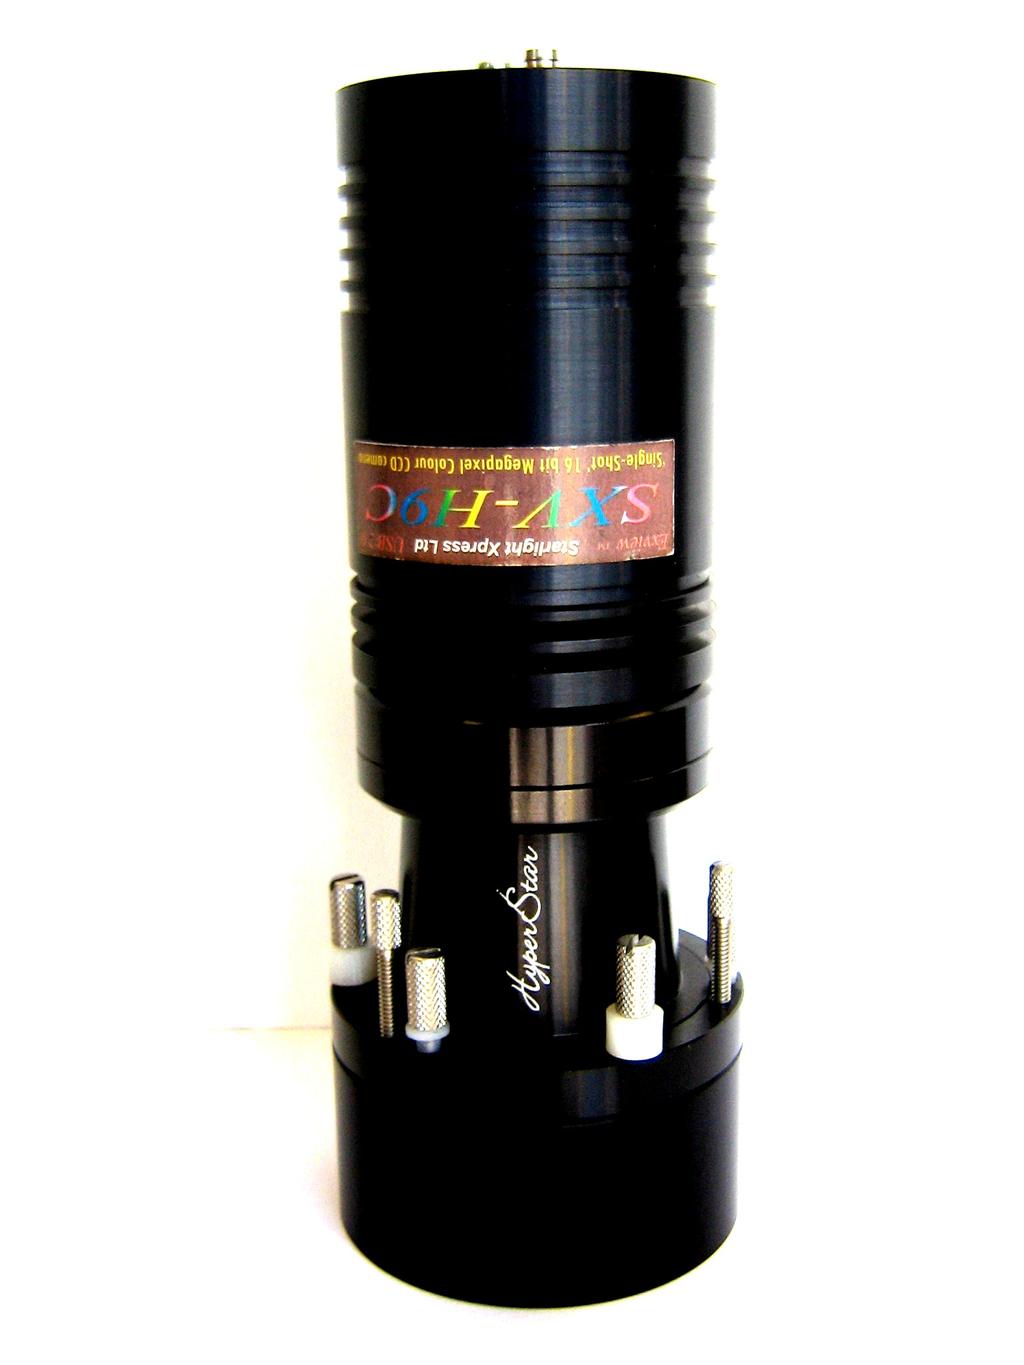 8) Thread the CCD camera onto the HyperStar lens.